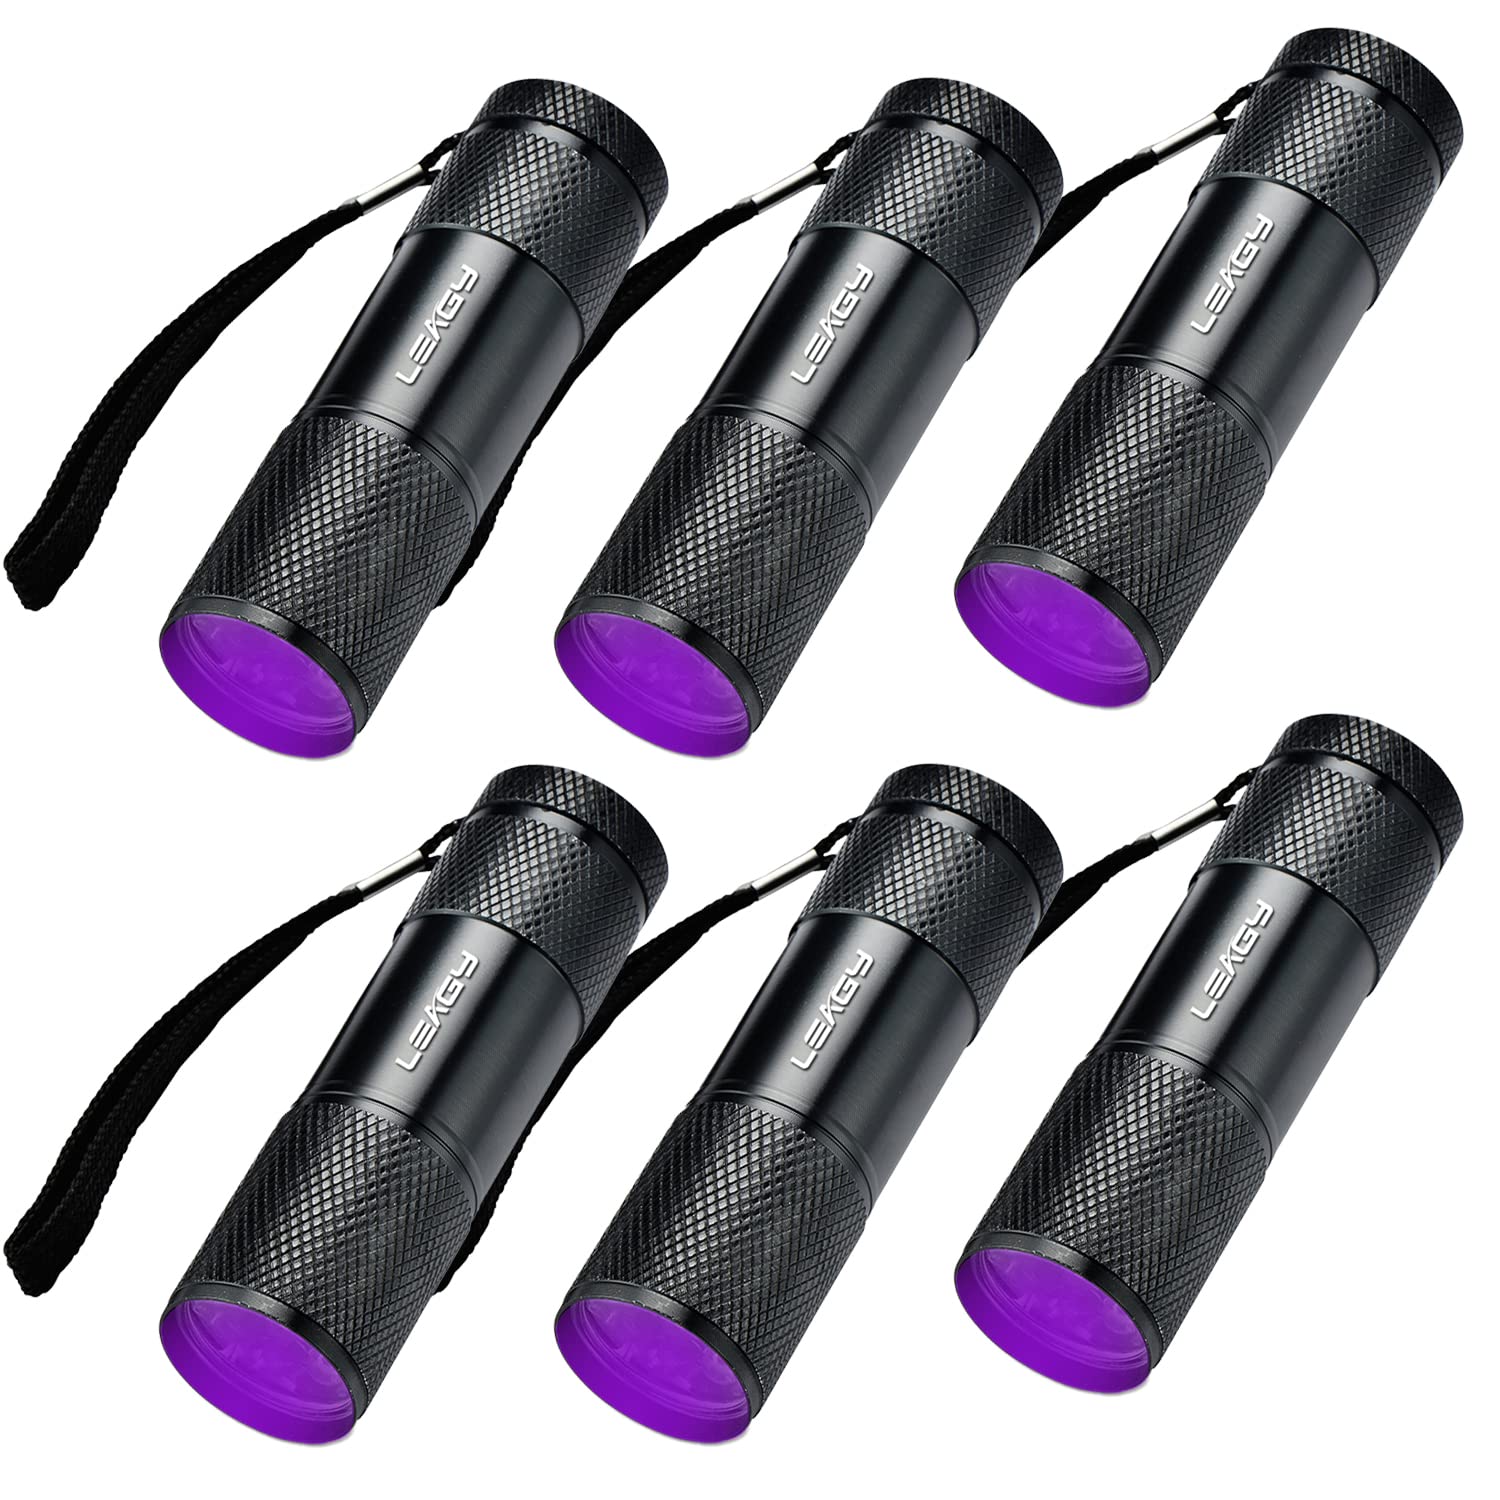 LEAGY 6 Pack UV Ultra Violet Blacklight 9 LED Flashlight Torch Light Outdoors Etc (Black)